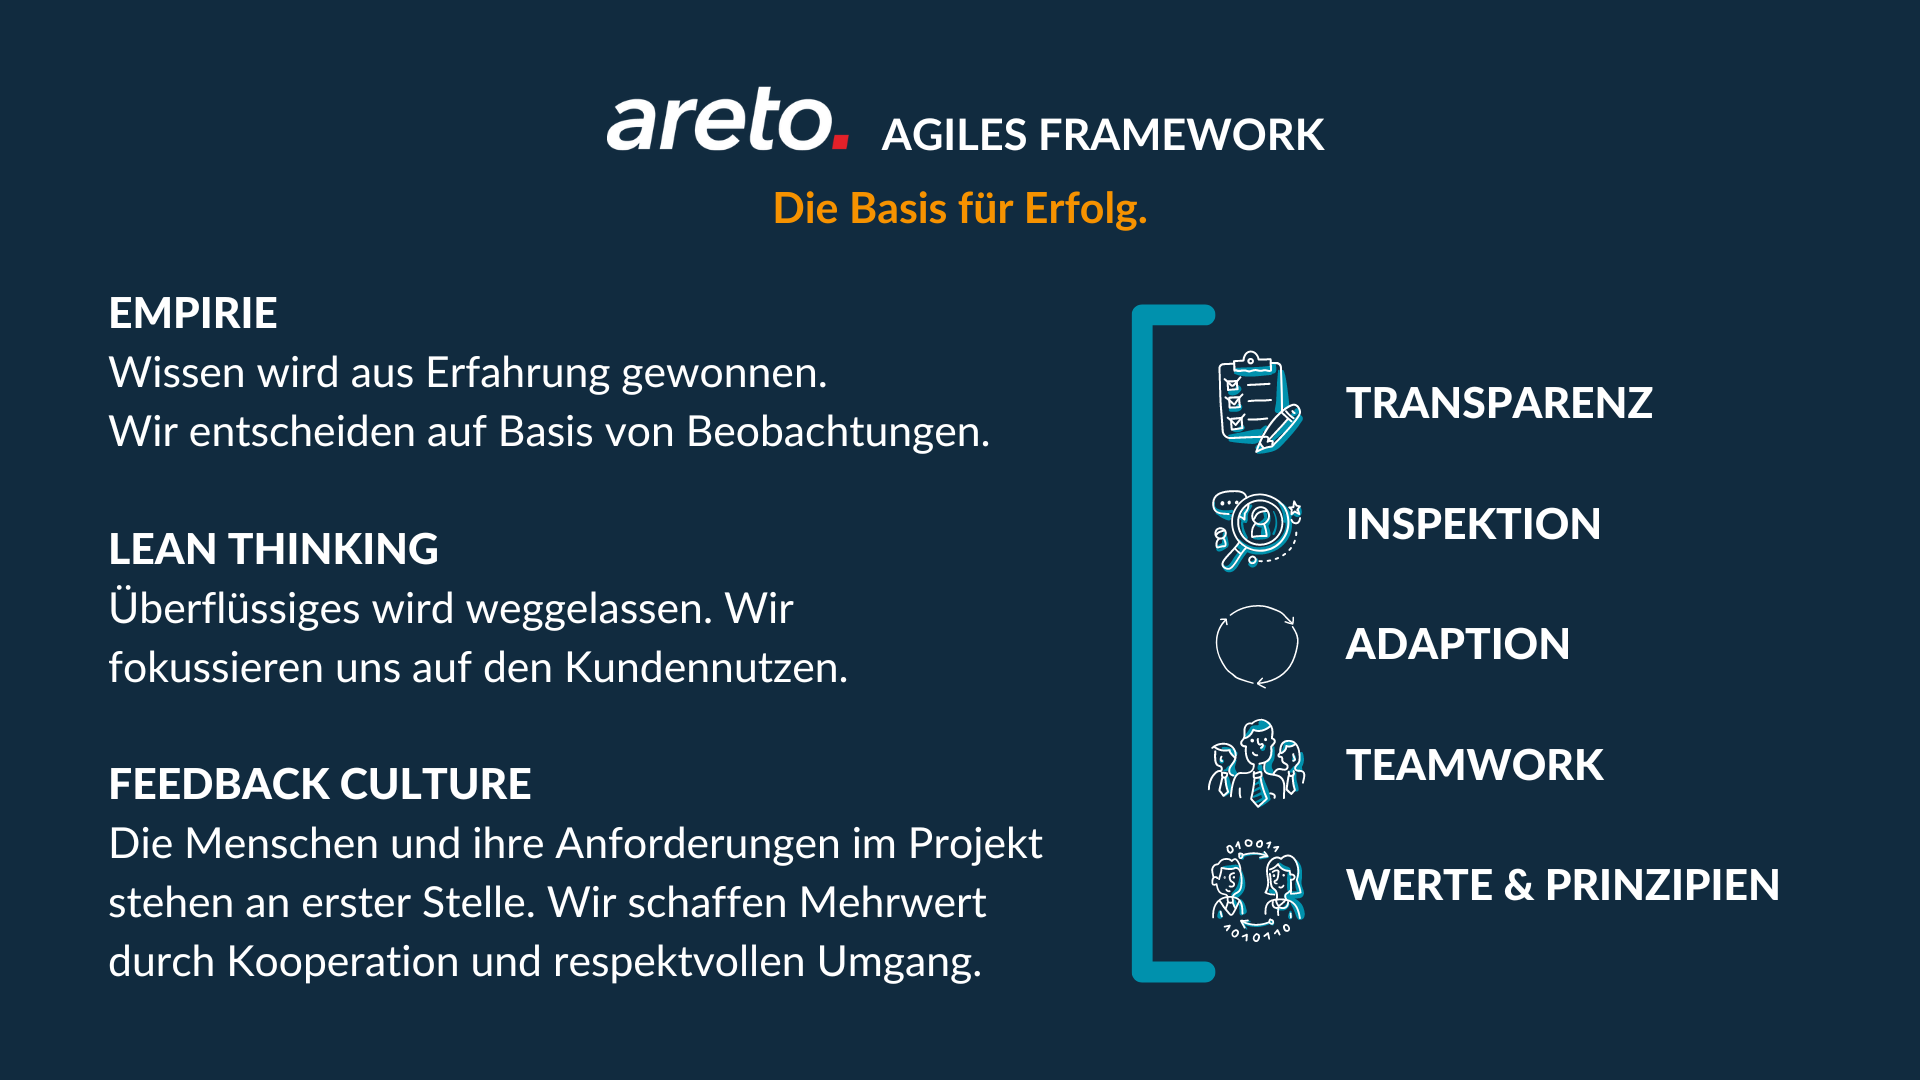 areto agiles framework (1)